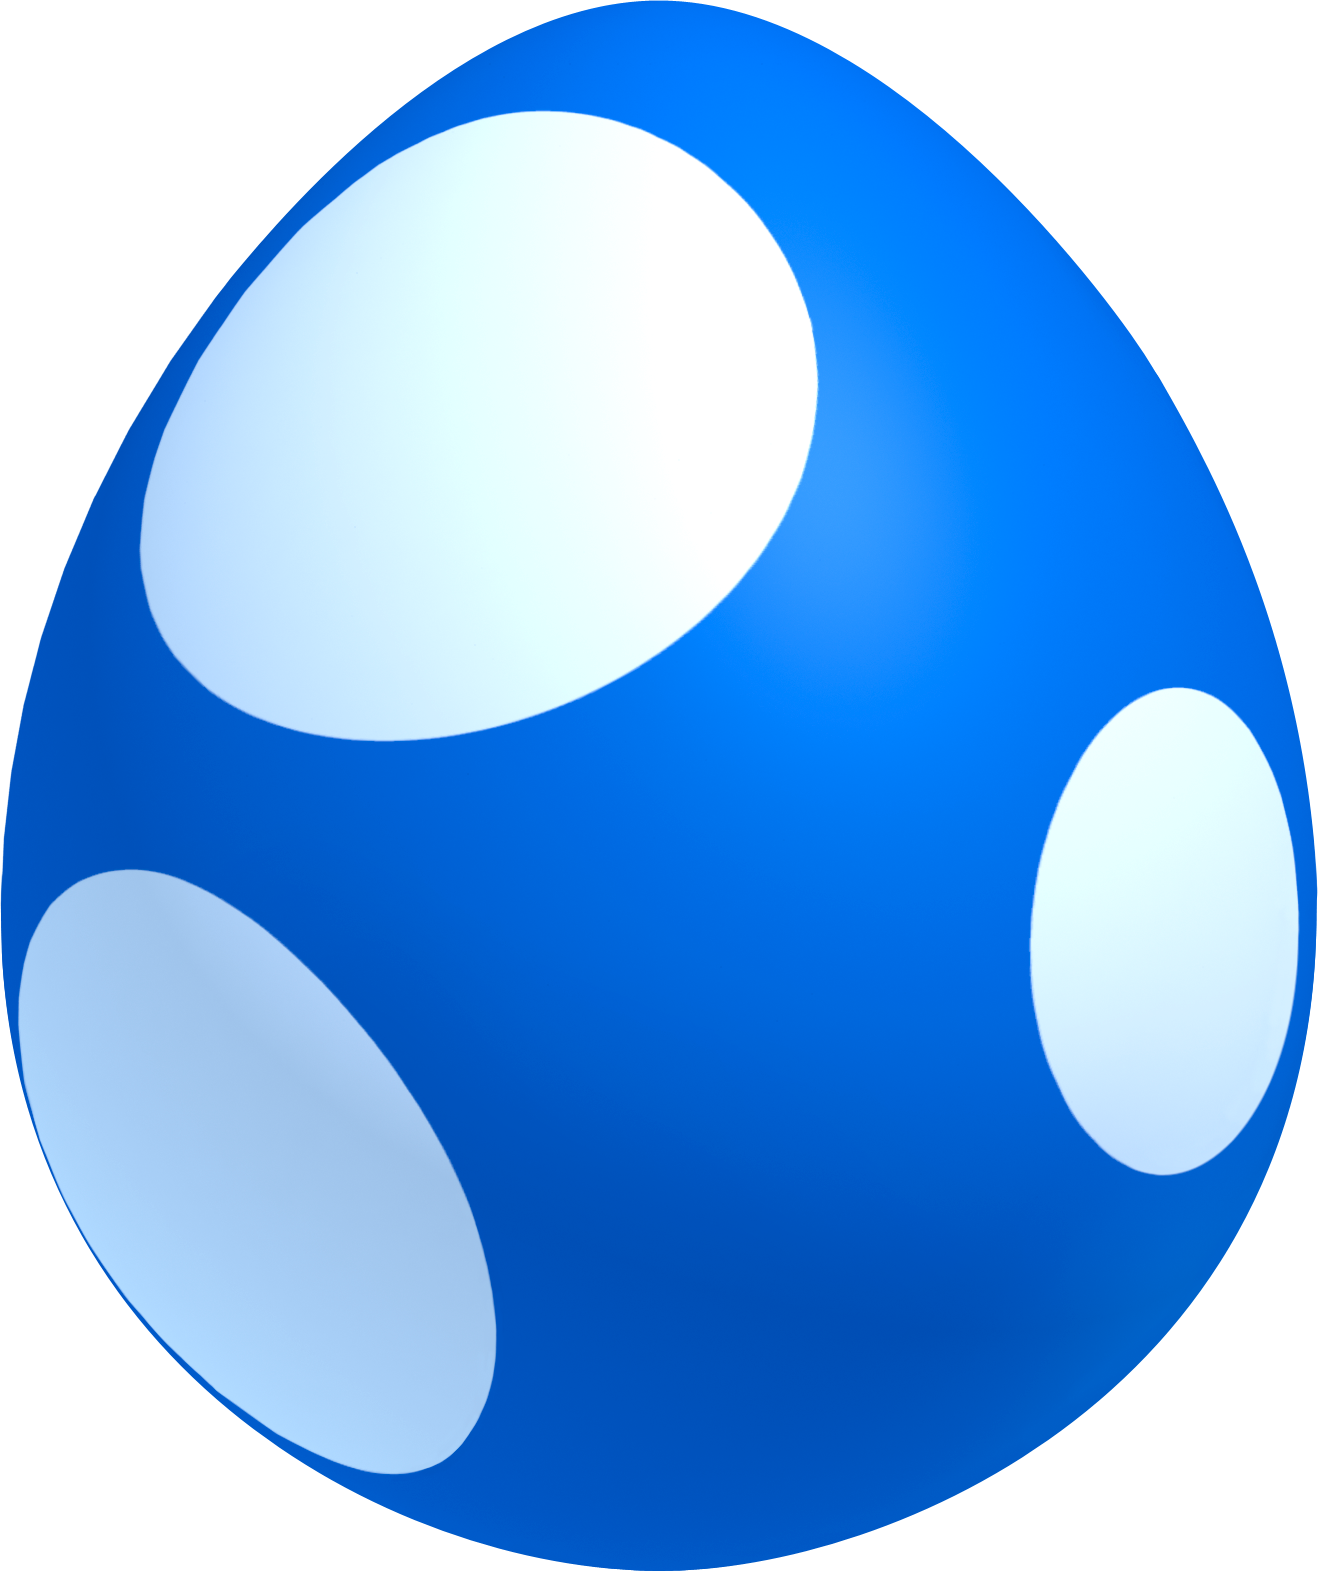 The Blue Baby Yoshi Egg